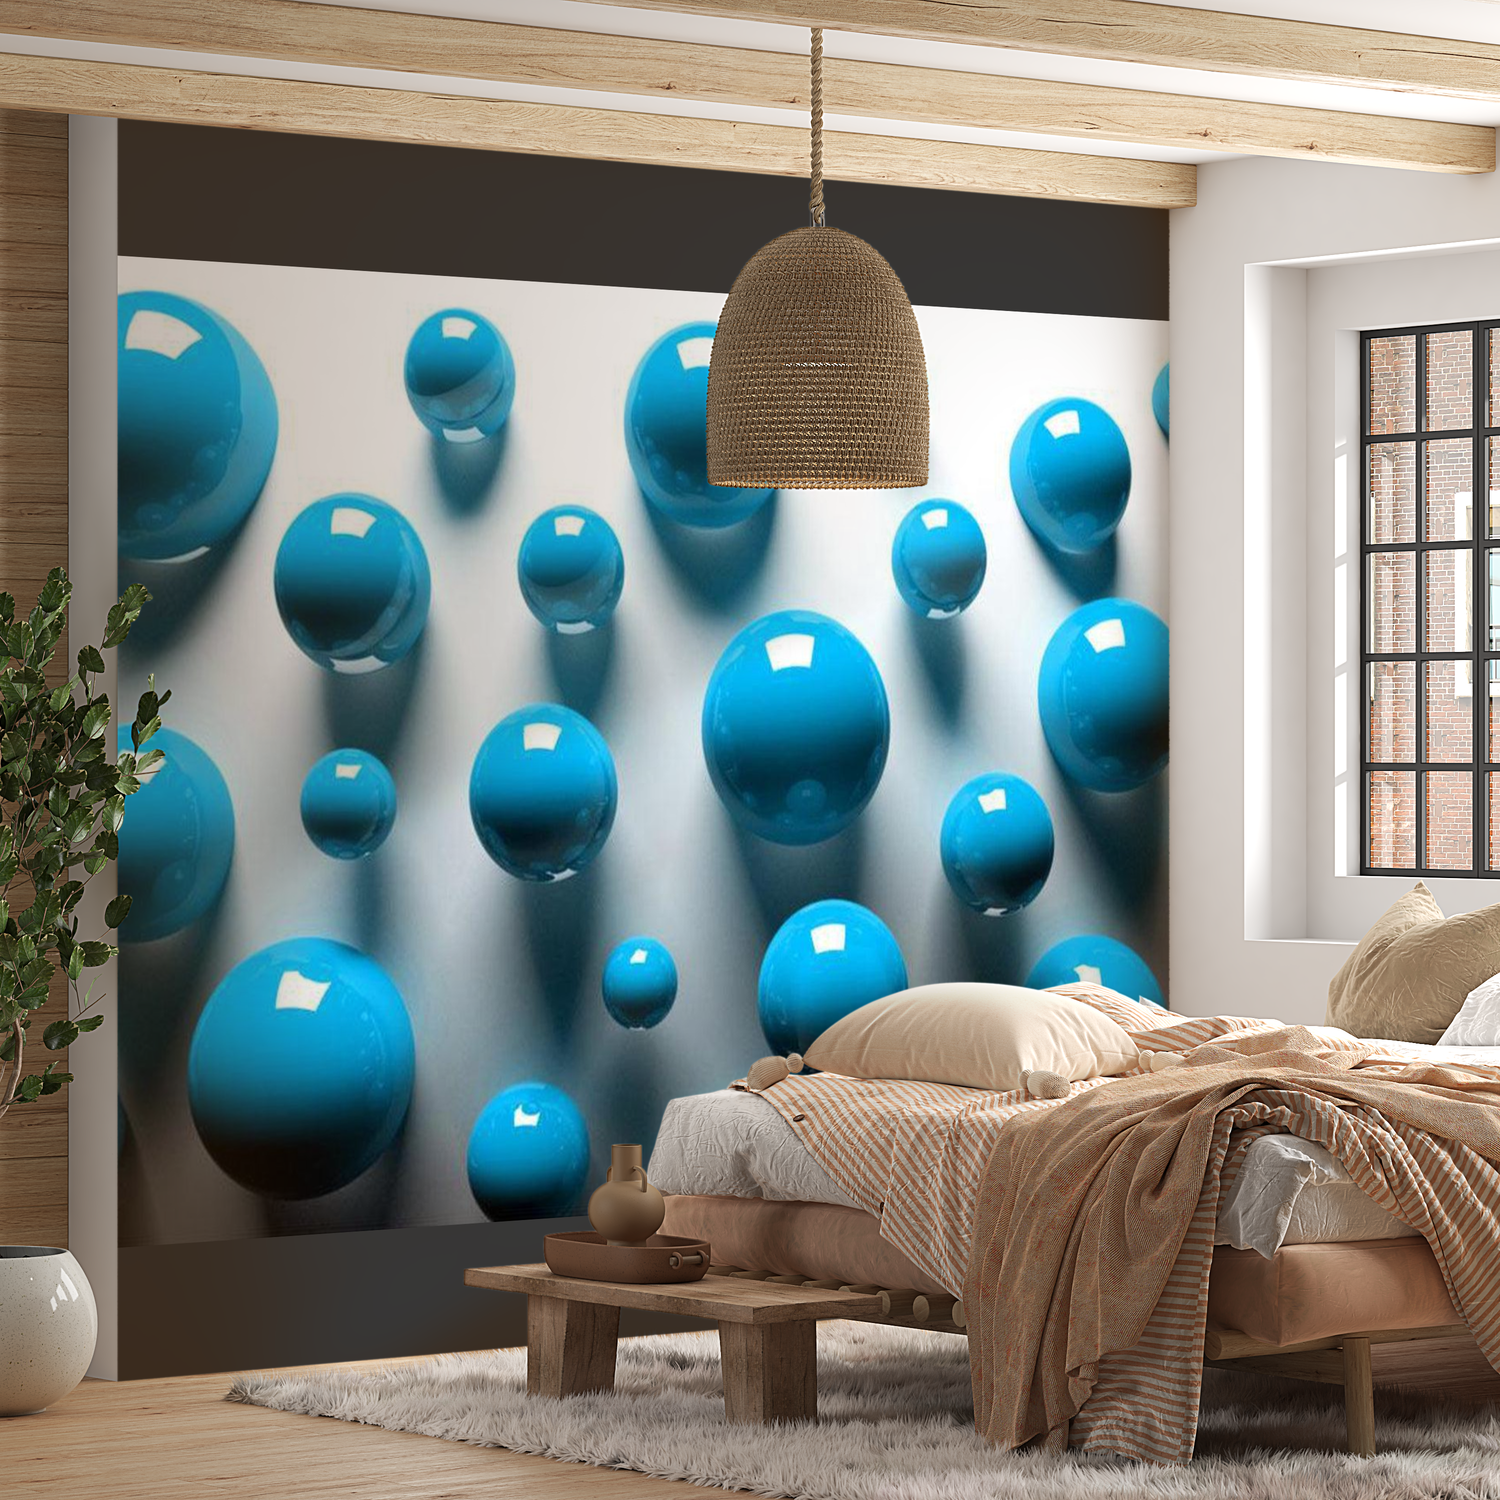 3D Illusion Wallpaper Wall Mural - Blue Balls 39"Wx27"H